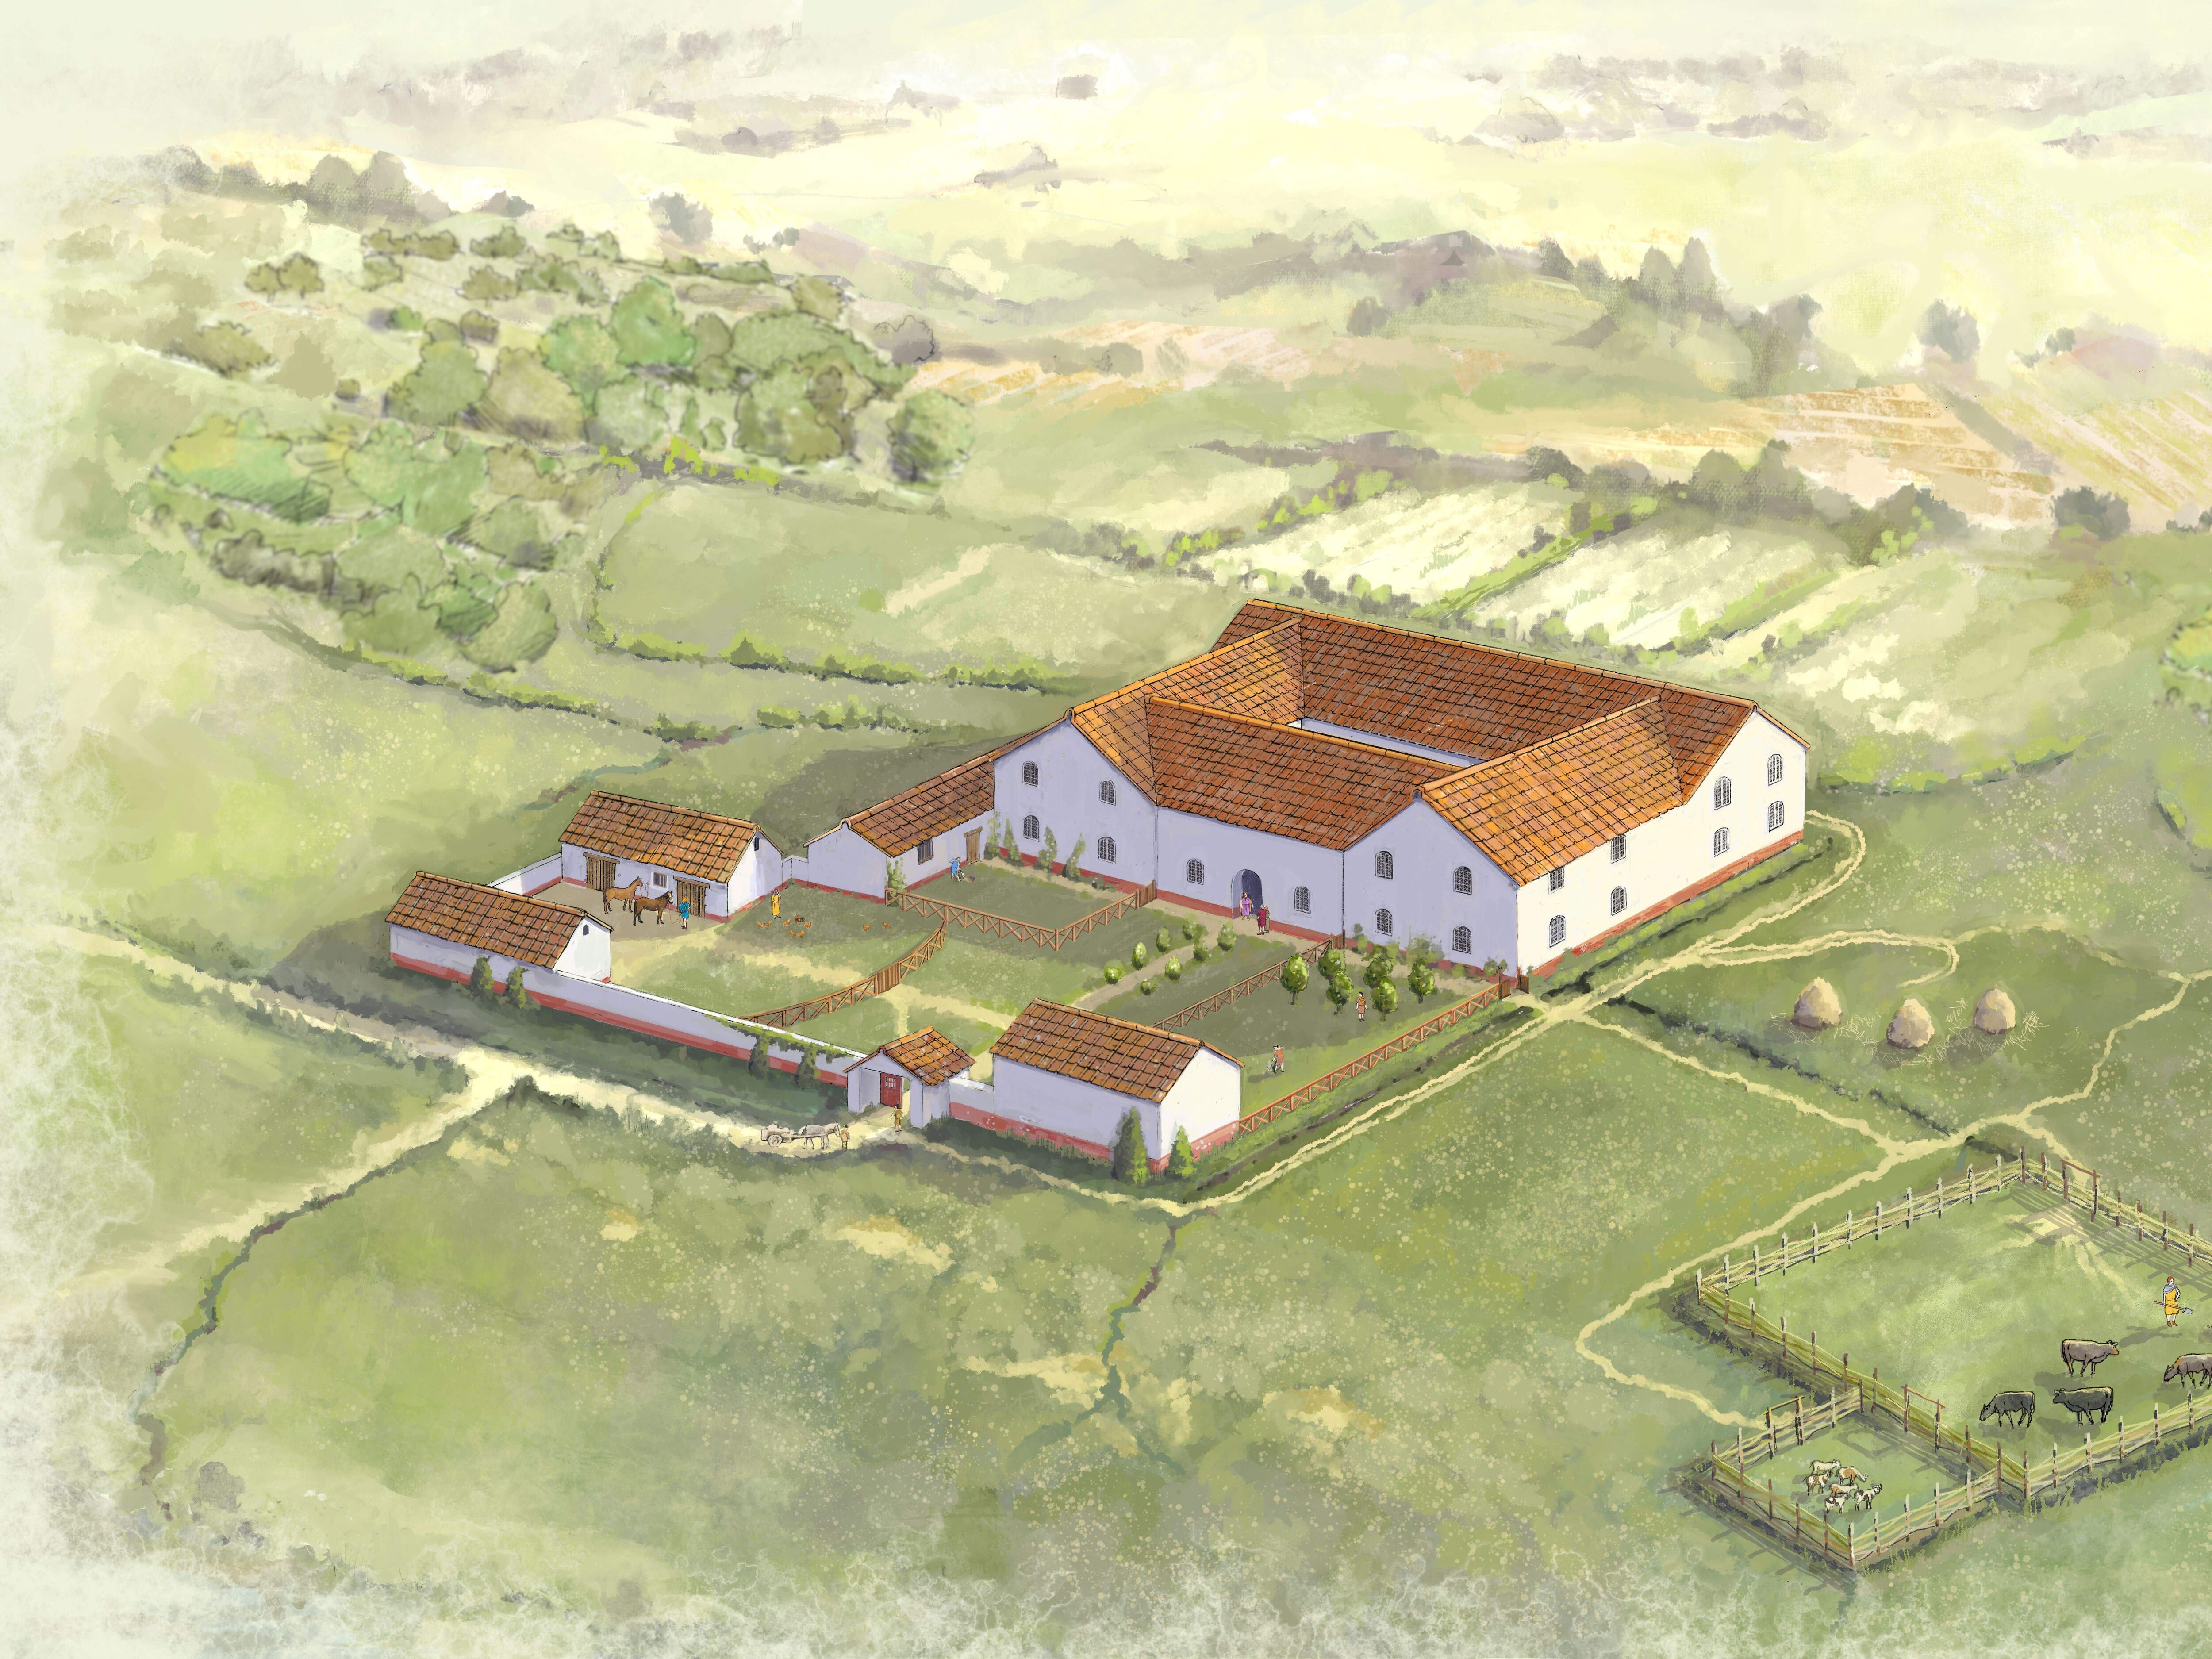 Archeological survey of land to aid nature restoration reveals two Roman villas